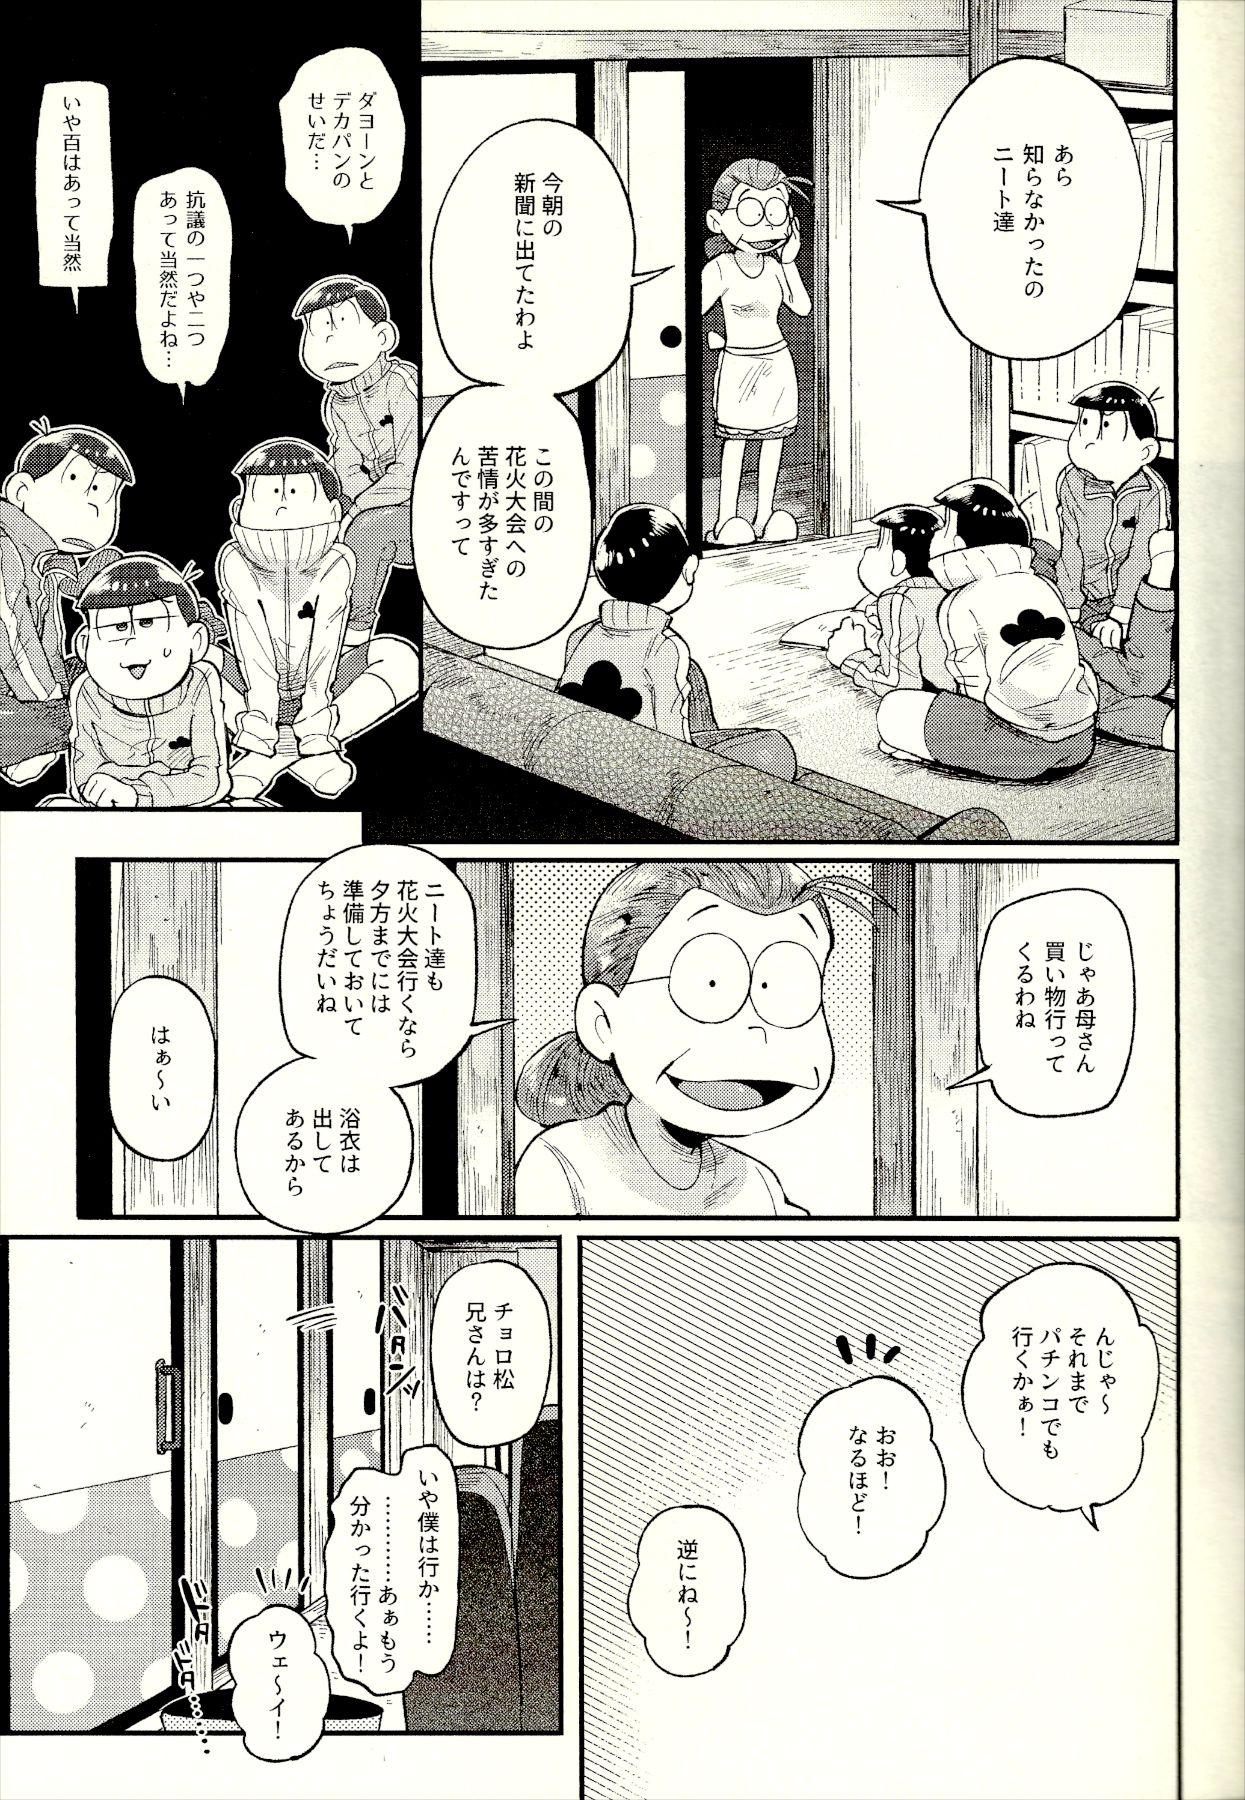 Farting Season in the Summer - Osomatsu san 3way - Page 5